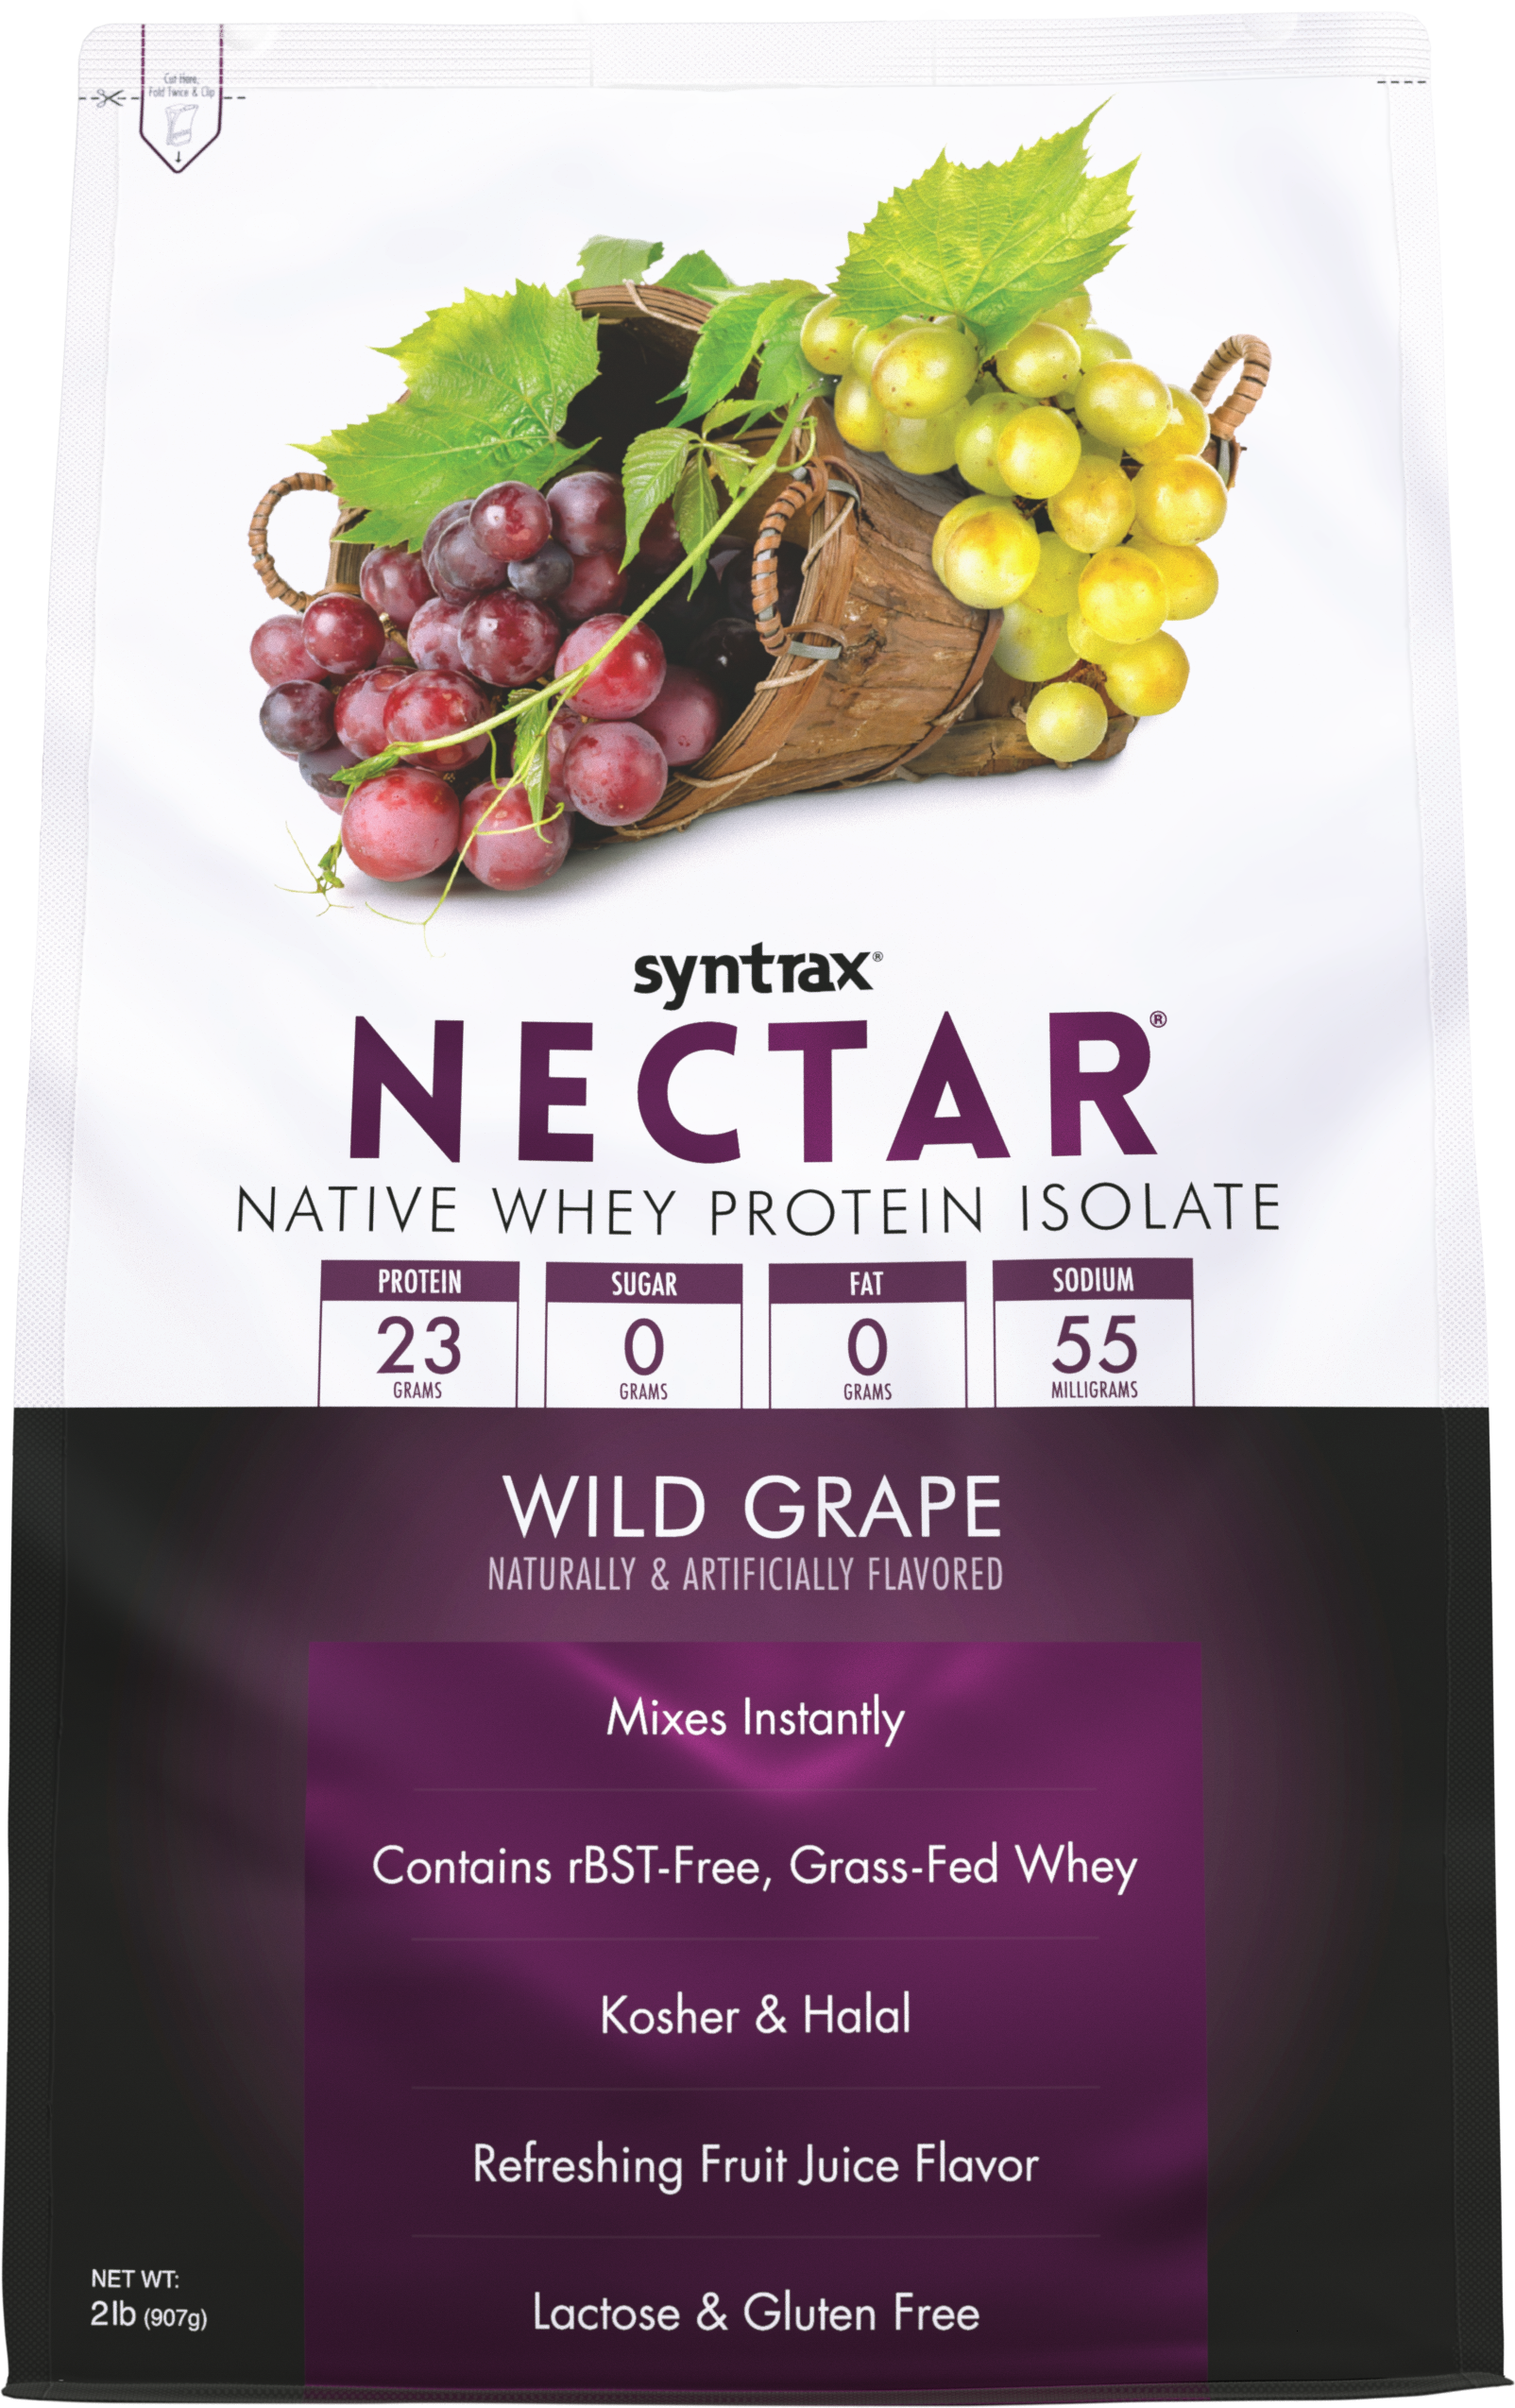 Syntrax Nectar 2lb Protein Powder - Wild Grape